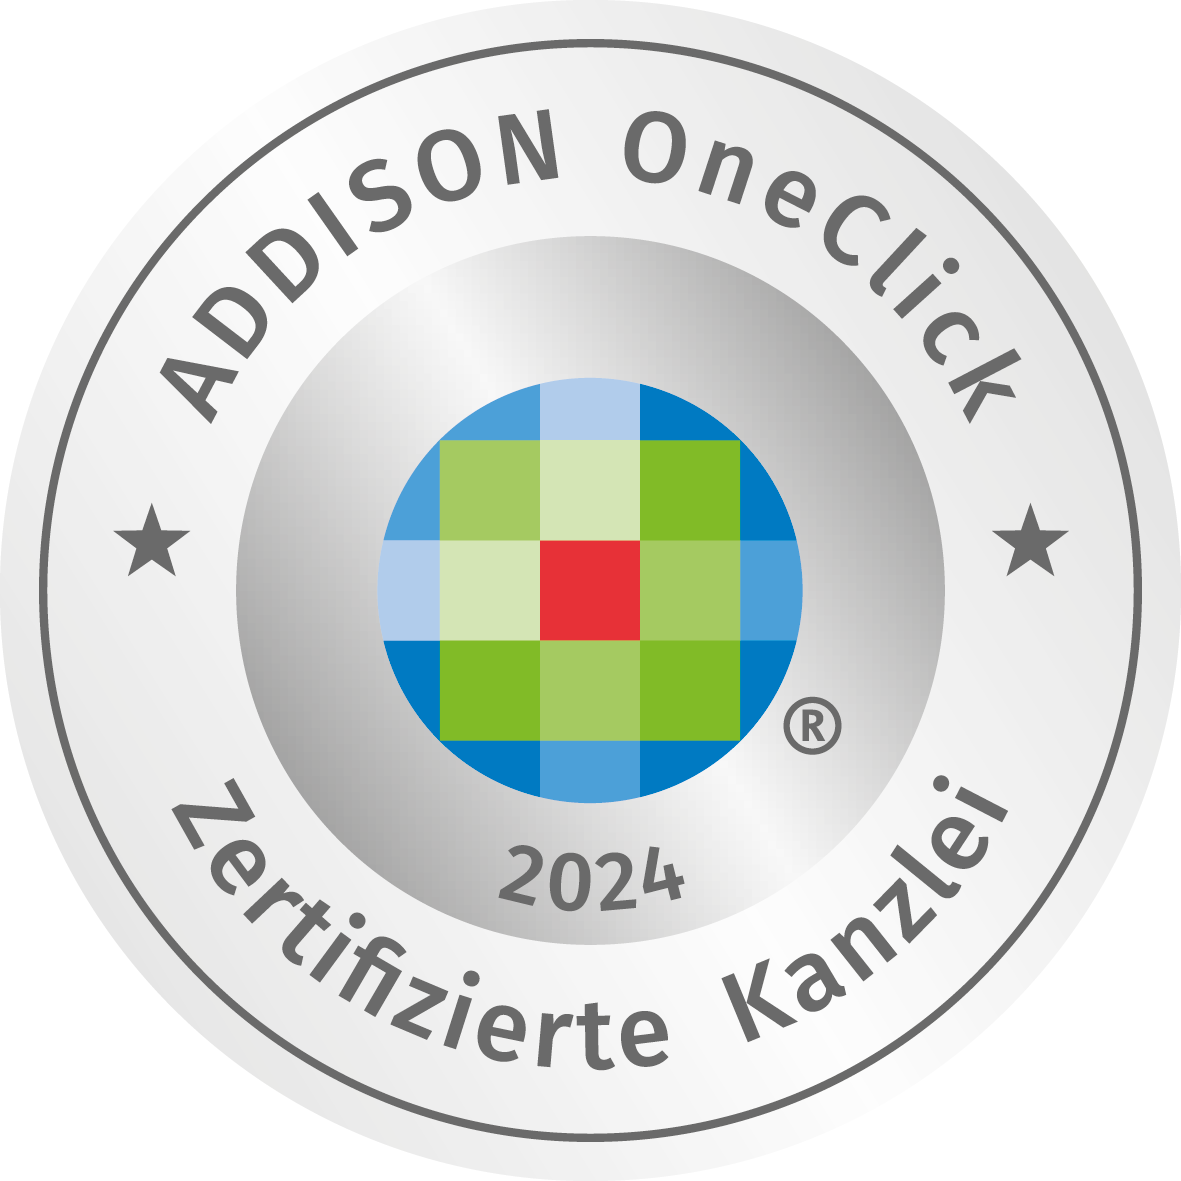 Addison OneClick Zertifizierte Kanzlei 2024 - HS Treuhand GmbH